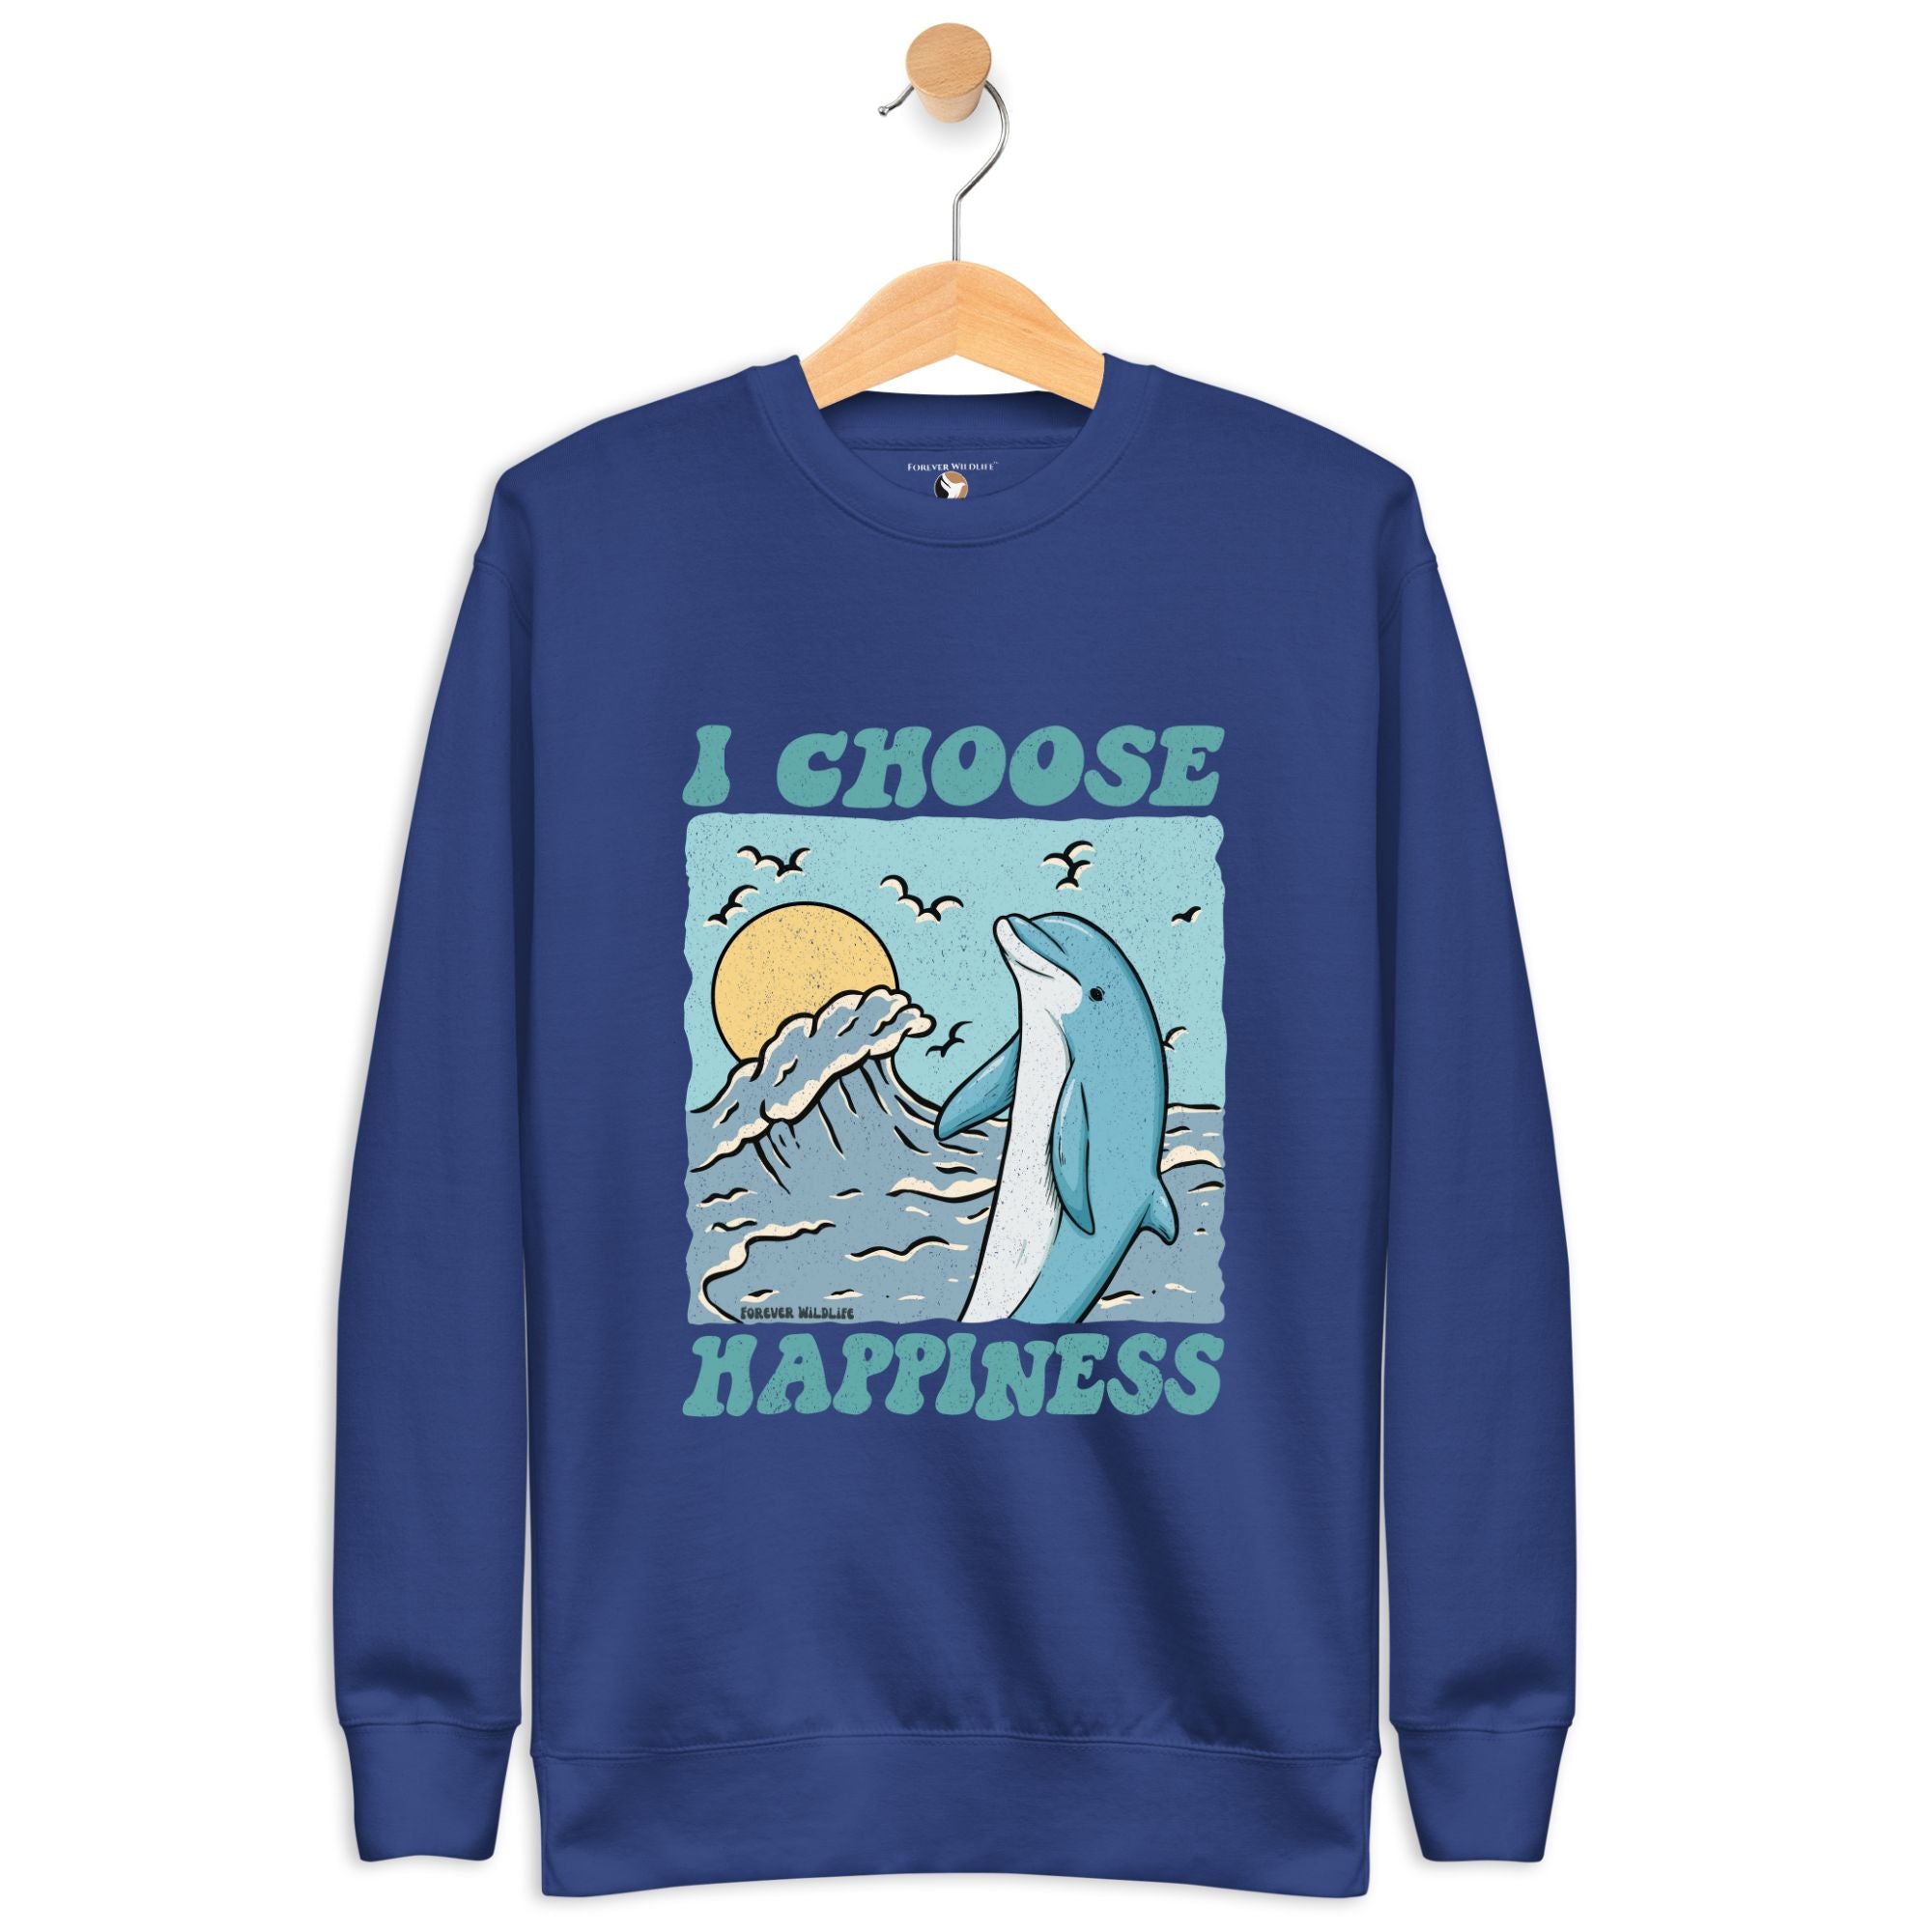 Dolphin Sweatshirt in Royal-Premium Wildlife Animal Inspiration Sweatshirt Design with 'I Choose Happiness' text, part of Wildlife Sweatshirts & Clothing from Forever Wildlife.